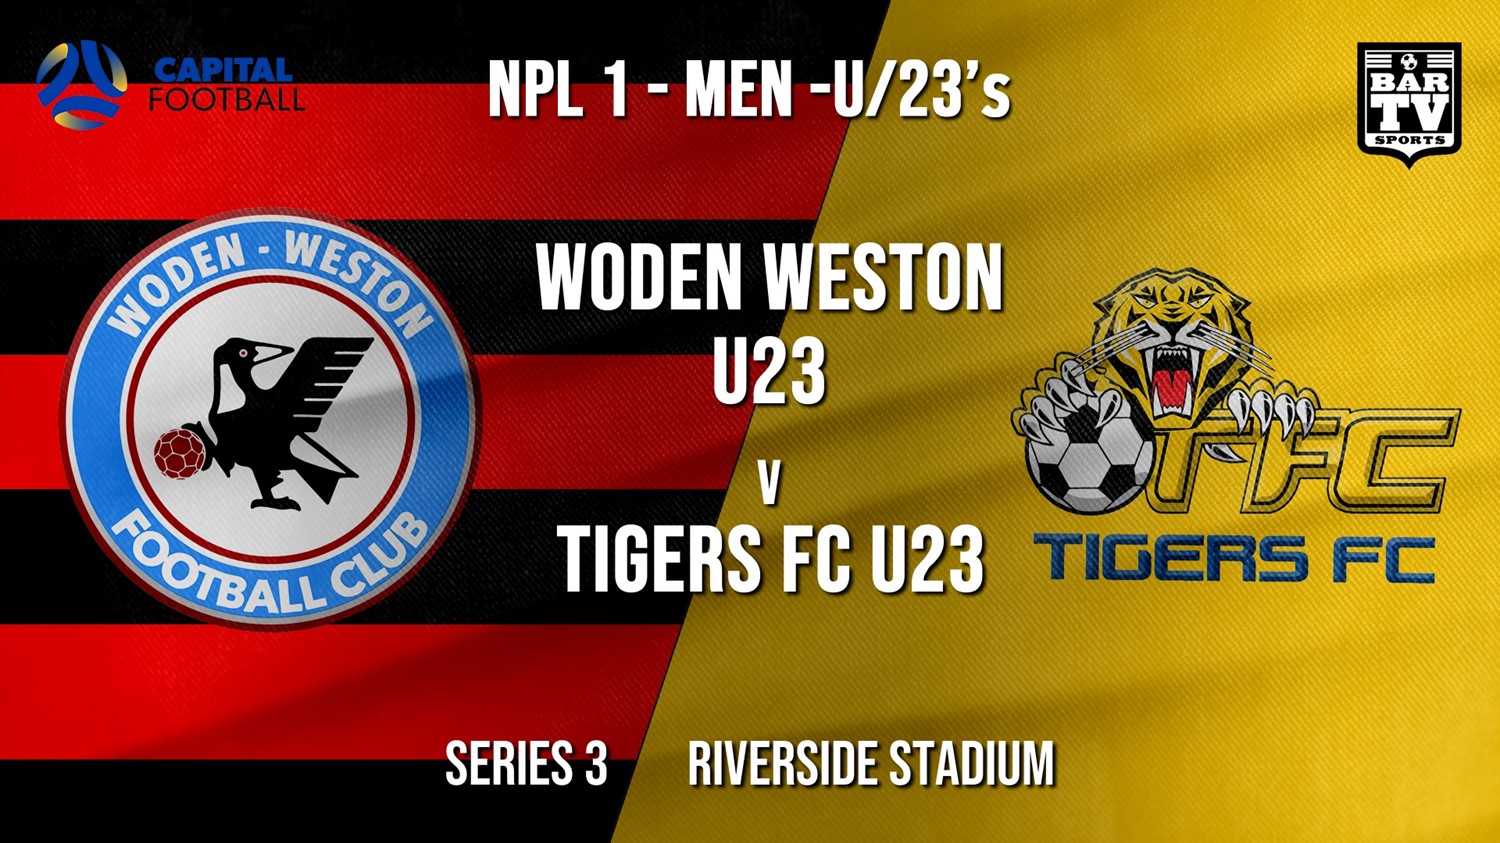 NPL1 Men - U23 - Capital Football  Series 3 - Woden Weston U23 v Tigers FC U23 (1) Minigame Slate Image